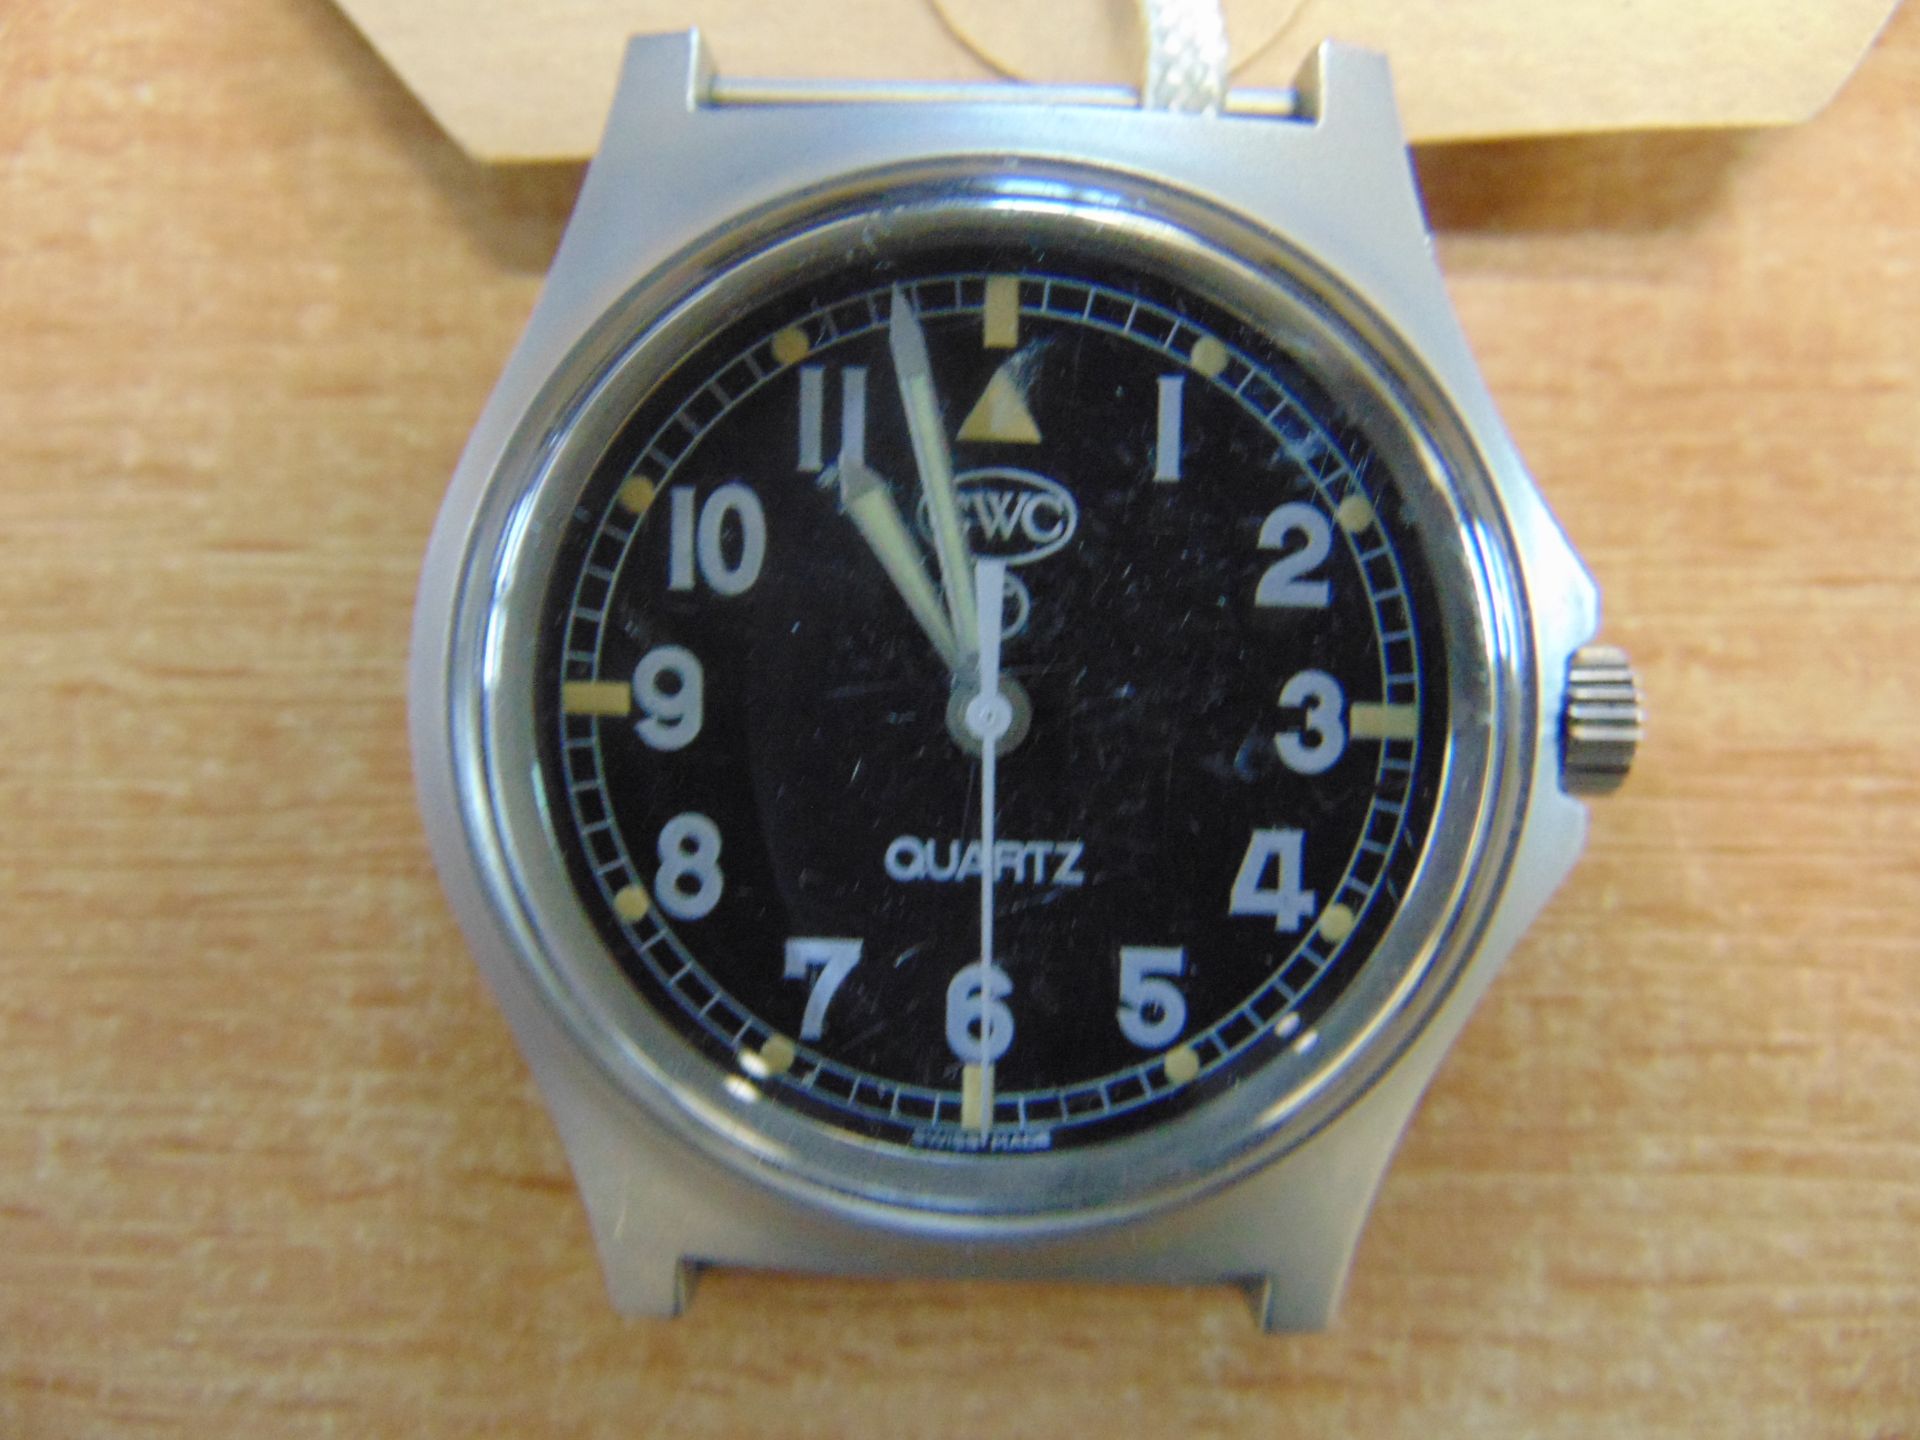 CWC (Cabot Watch Co Switzerland) W10 British Army Service Watch, Nato Marks, Nato Marks, Date 1998 - Image 2 of 5